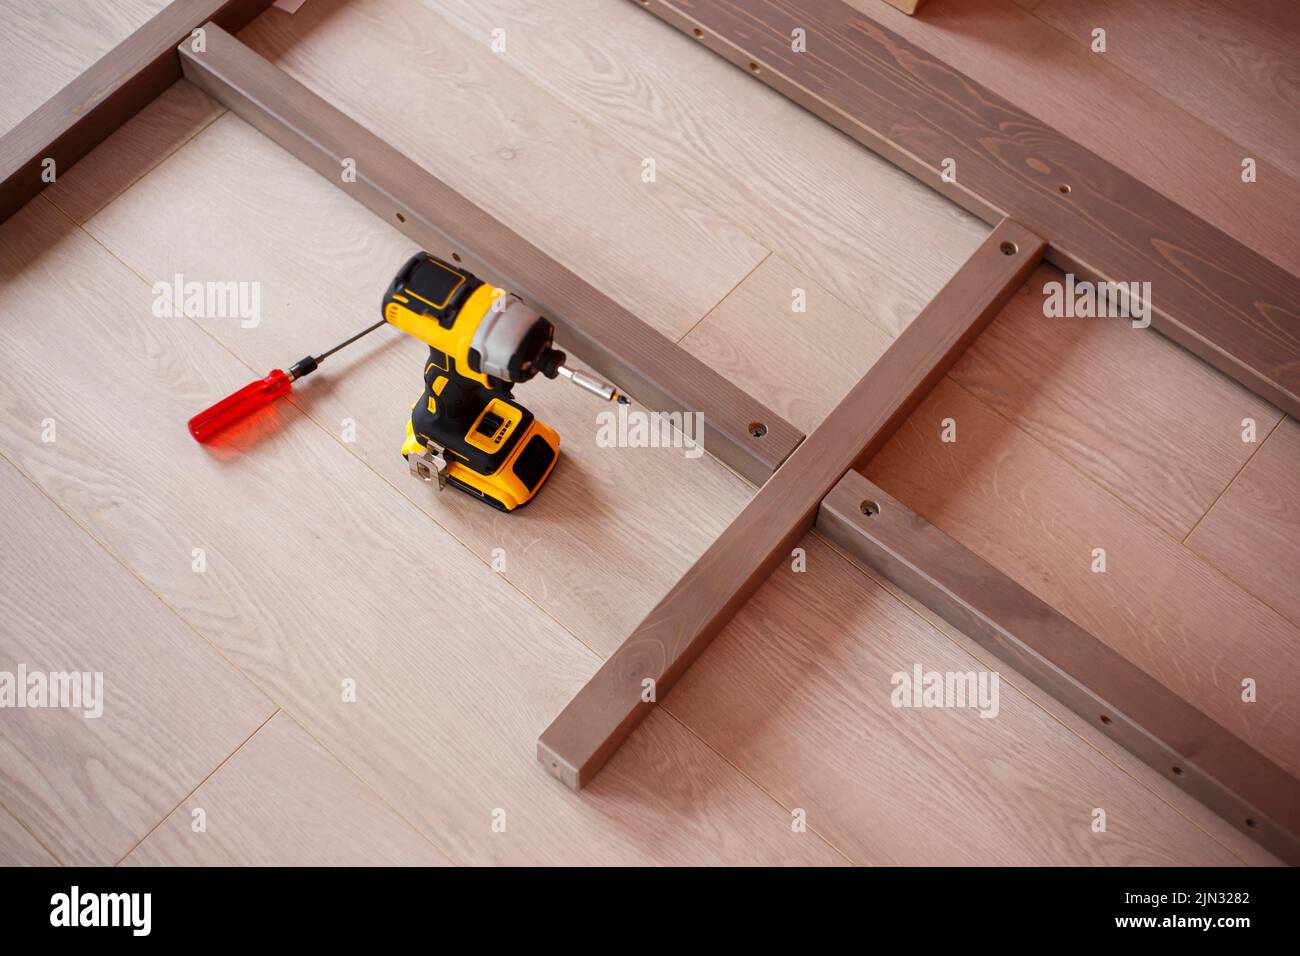 Assembling furniture at home. Home repairs Stock Photo